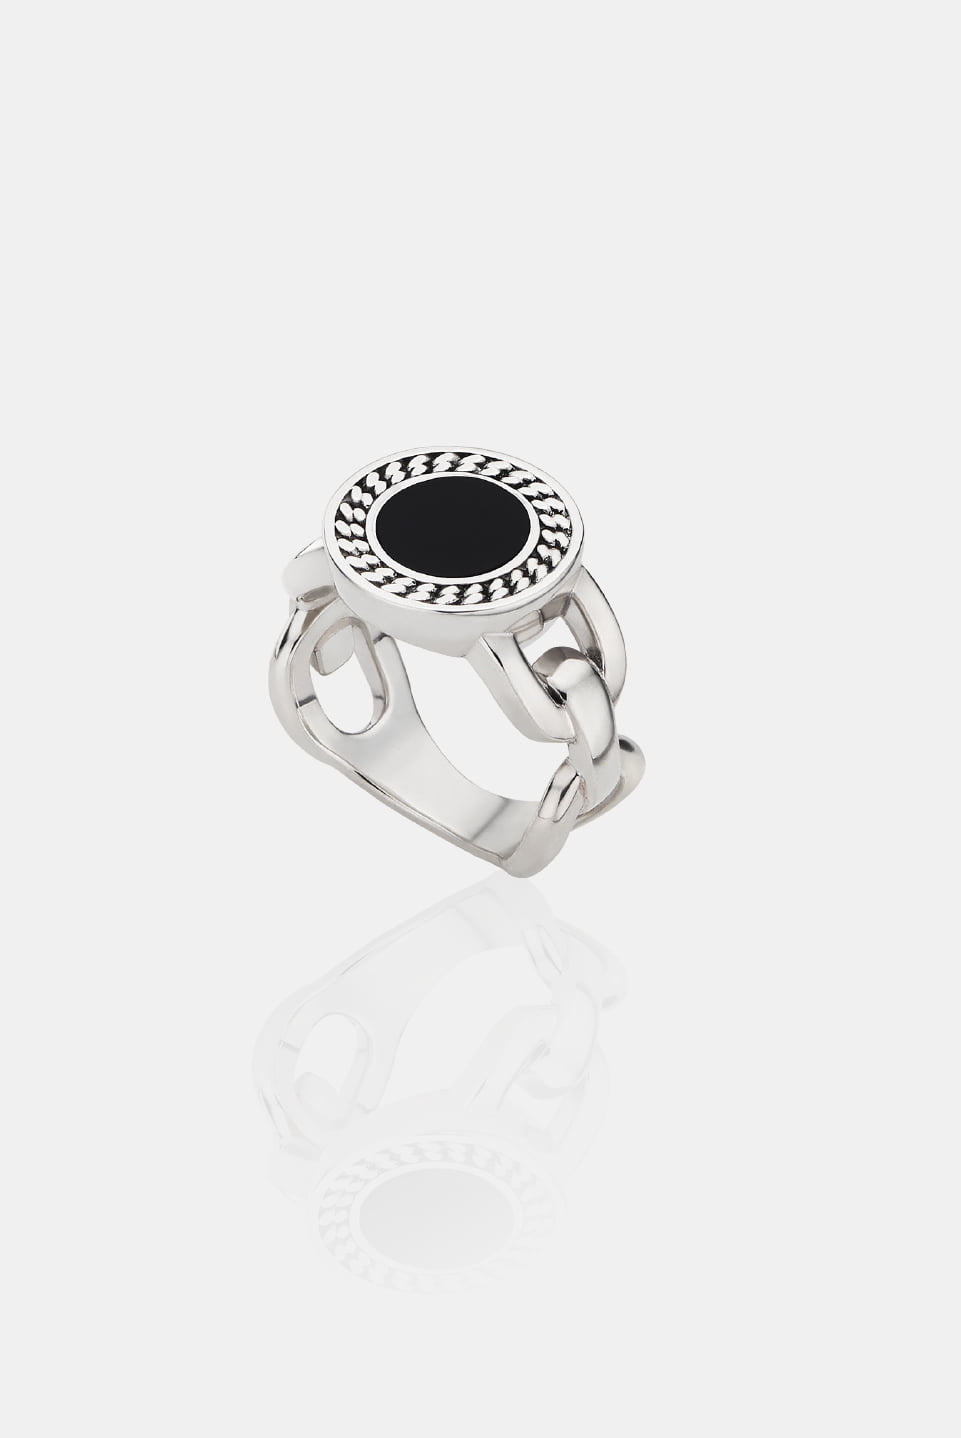 Liberta Black Onyx Ring in Silver